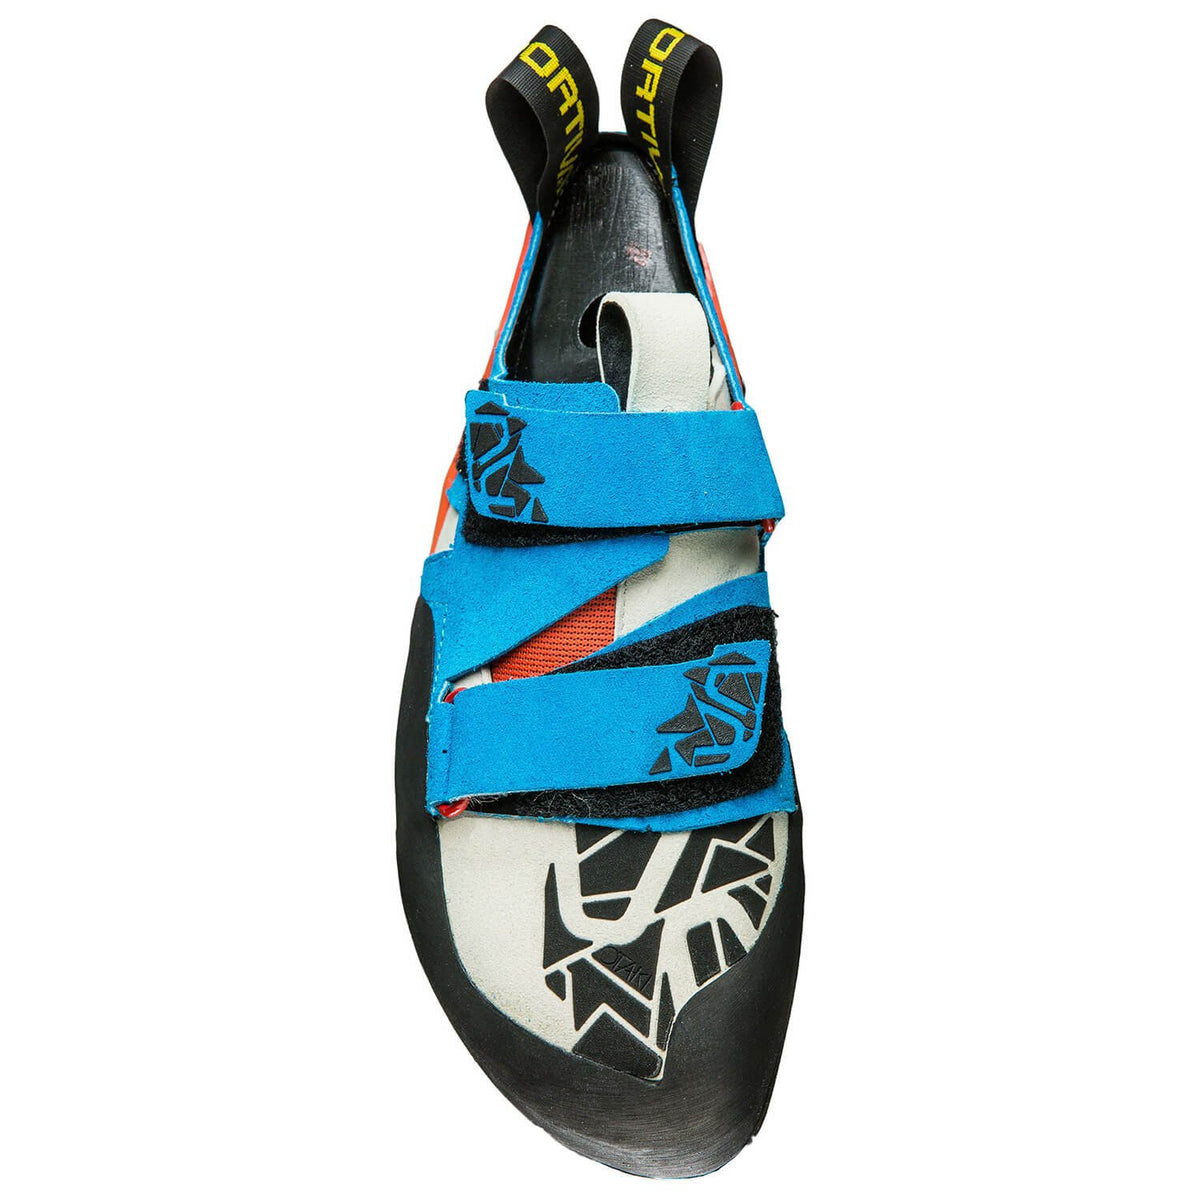 La Sportiva Otaki climbing shoe, view from above showing strap detail